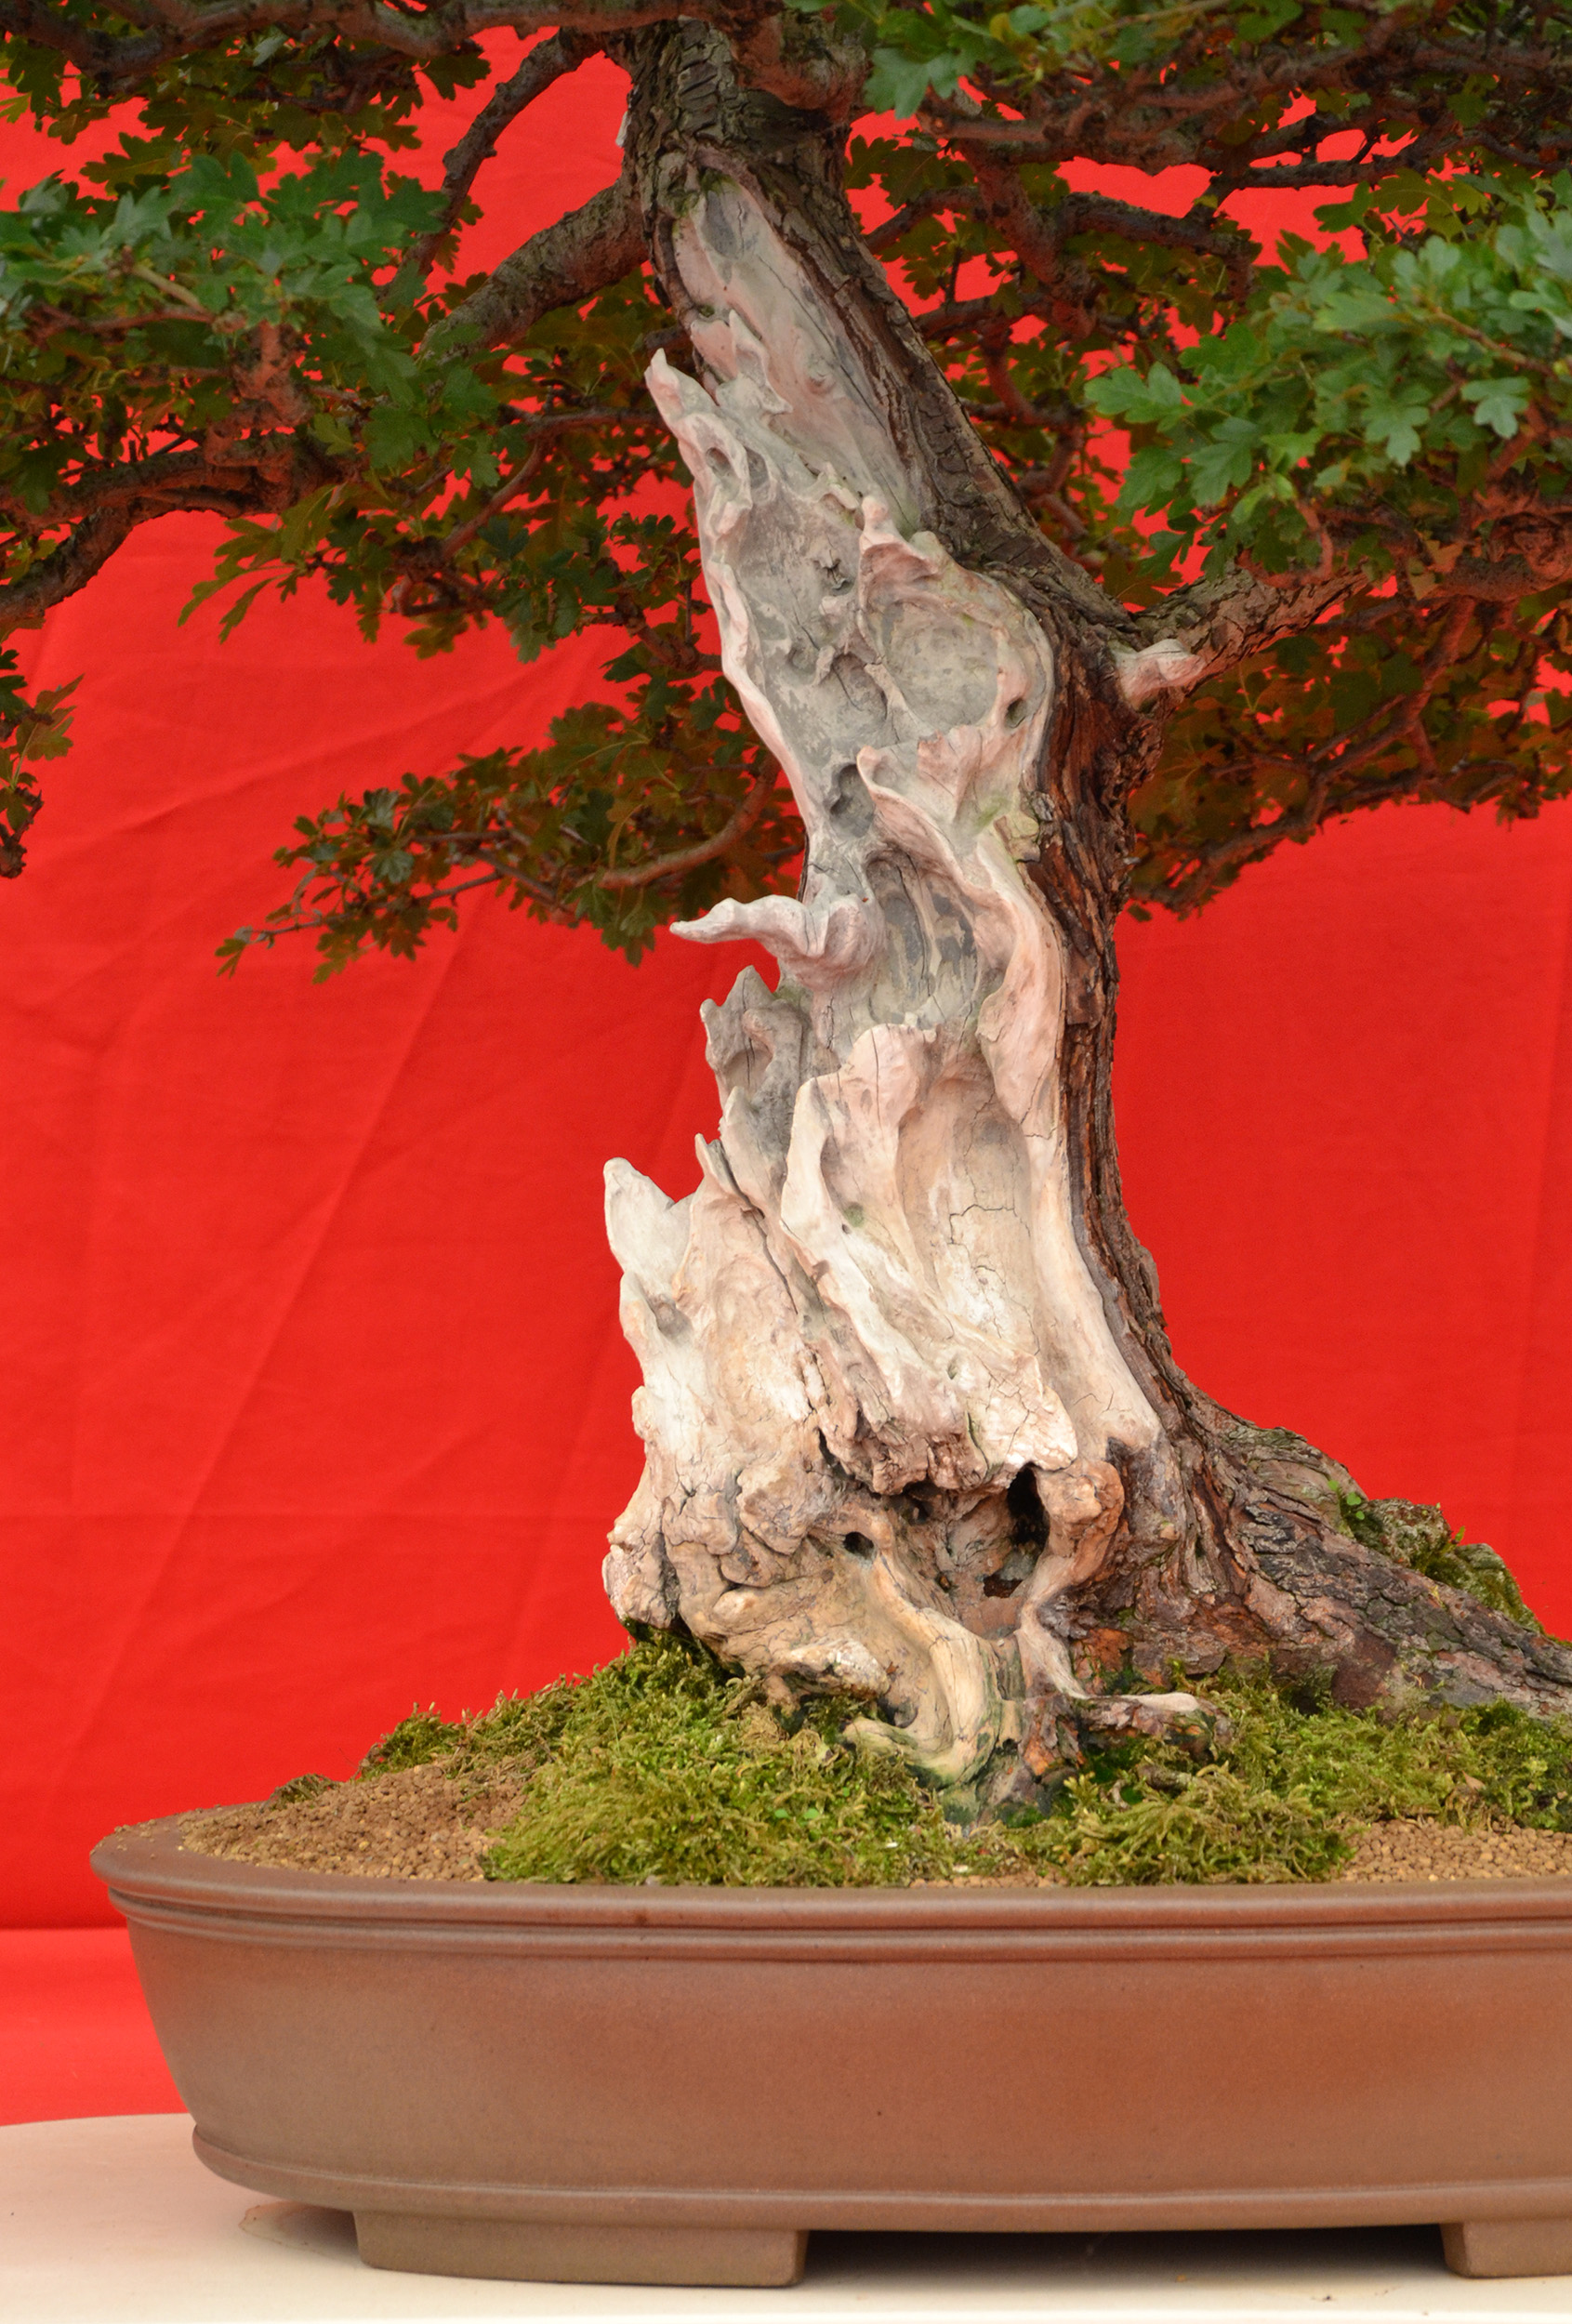 Shari on bonsai tree photo